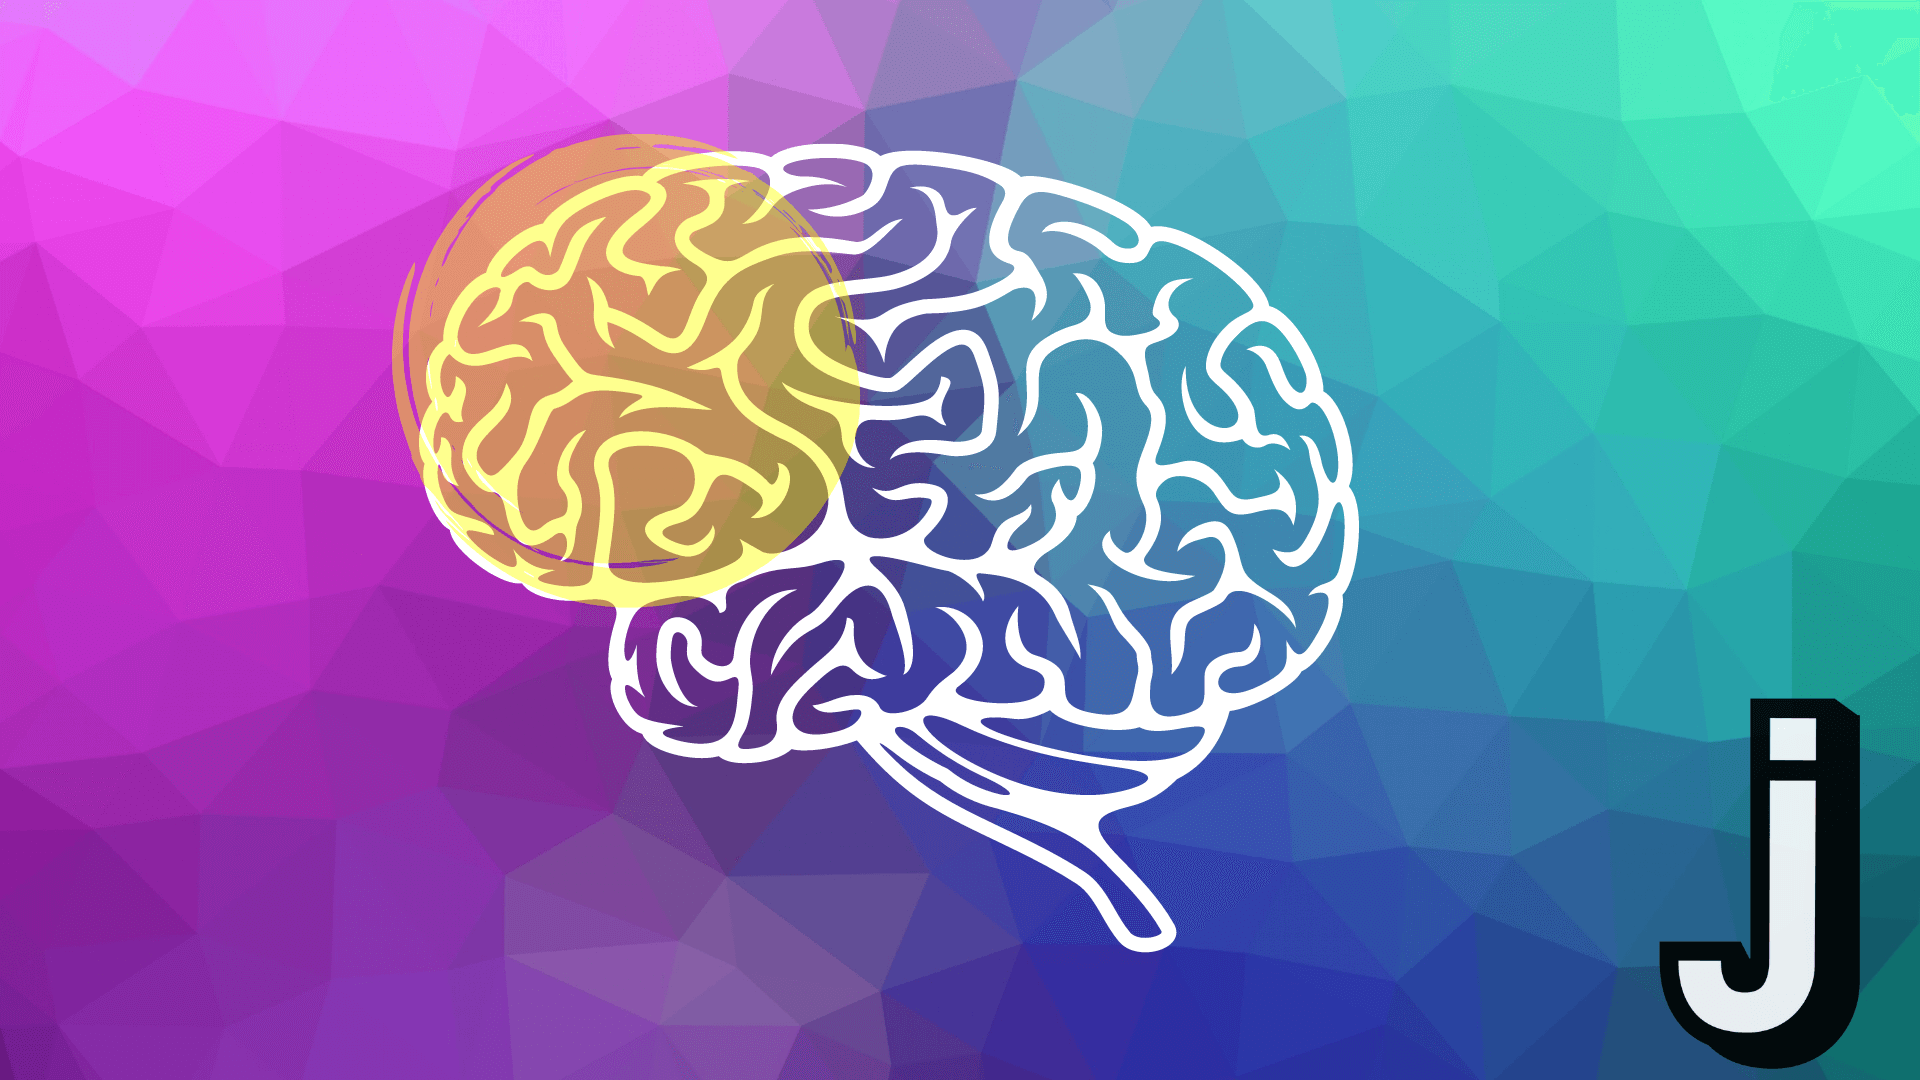 ap psychology critical thinking brain exercise